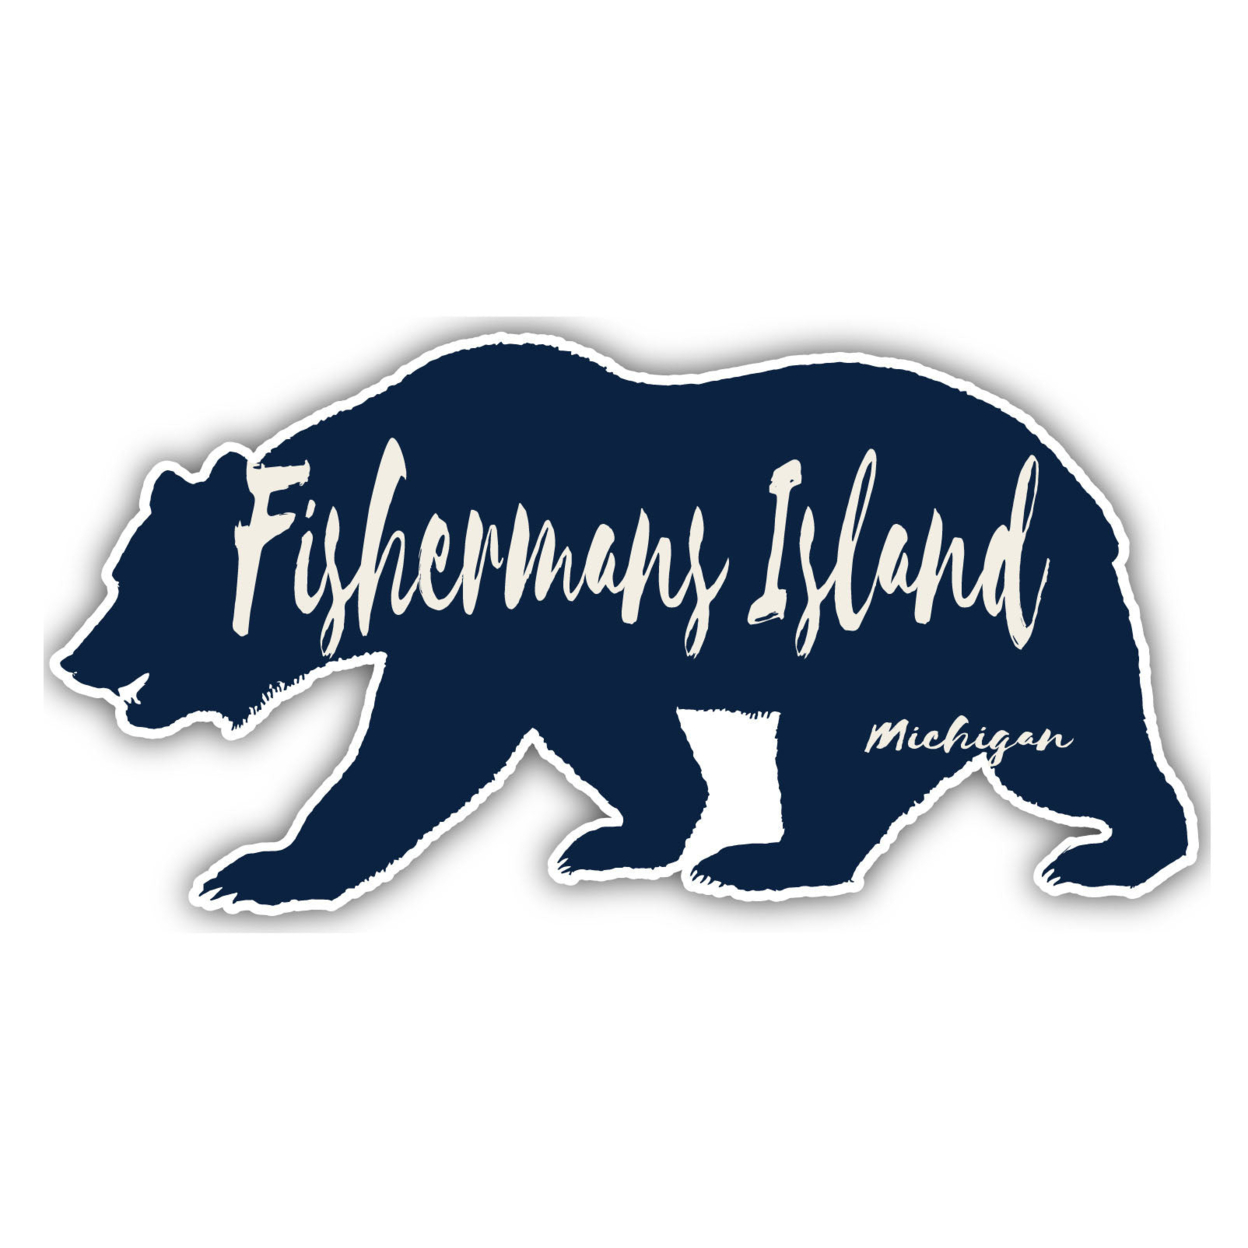 Fishermans Island Michigan Souvenir Decorative Stickers (Choose Theme And Size) - Single Unit, 10-Inch, Bear